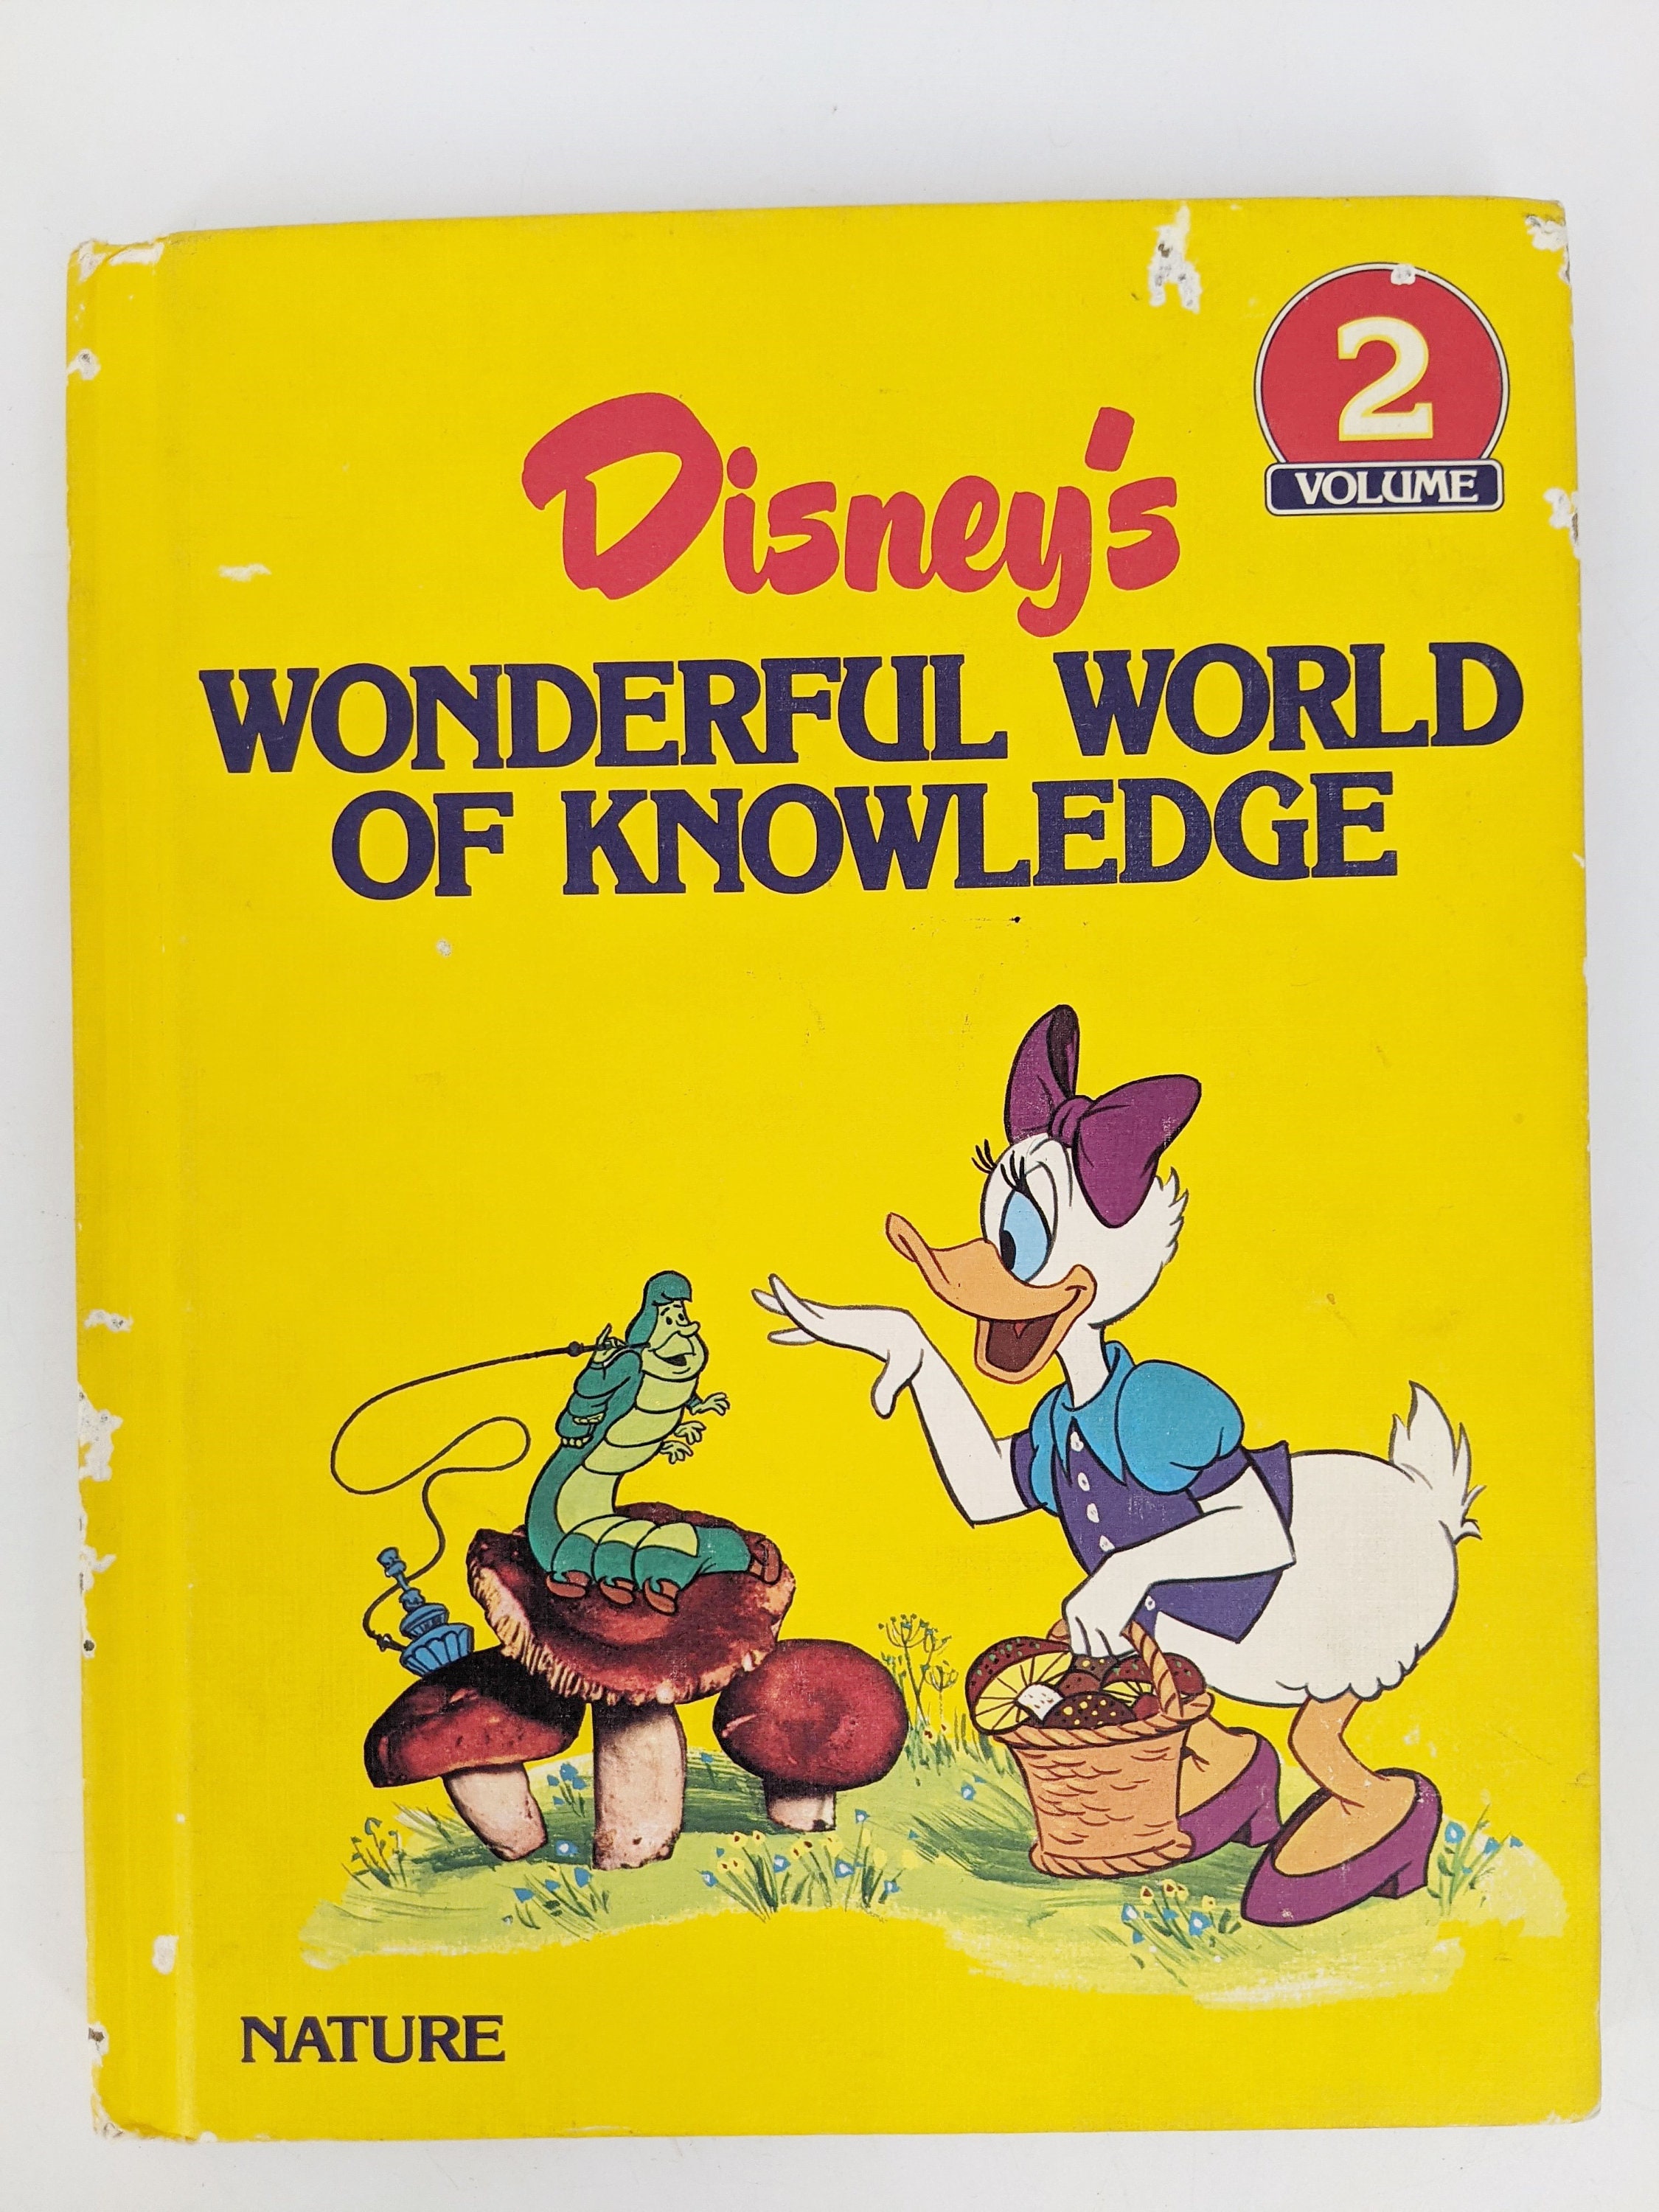 Classiques Animaux, 80 GOMMETTES - Walt Disney company - Librairie Madison